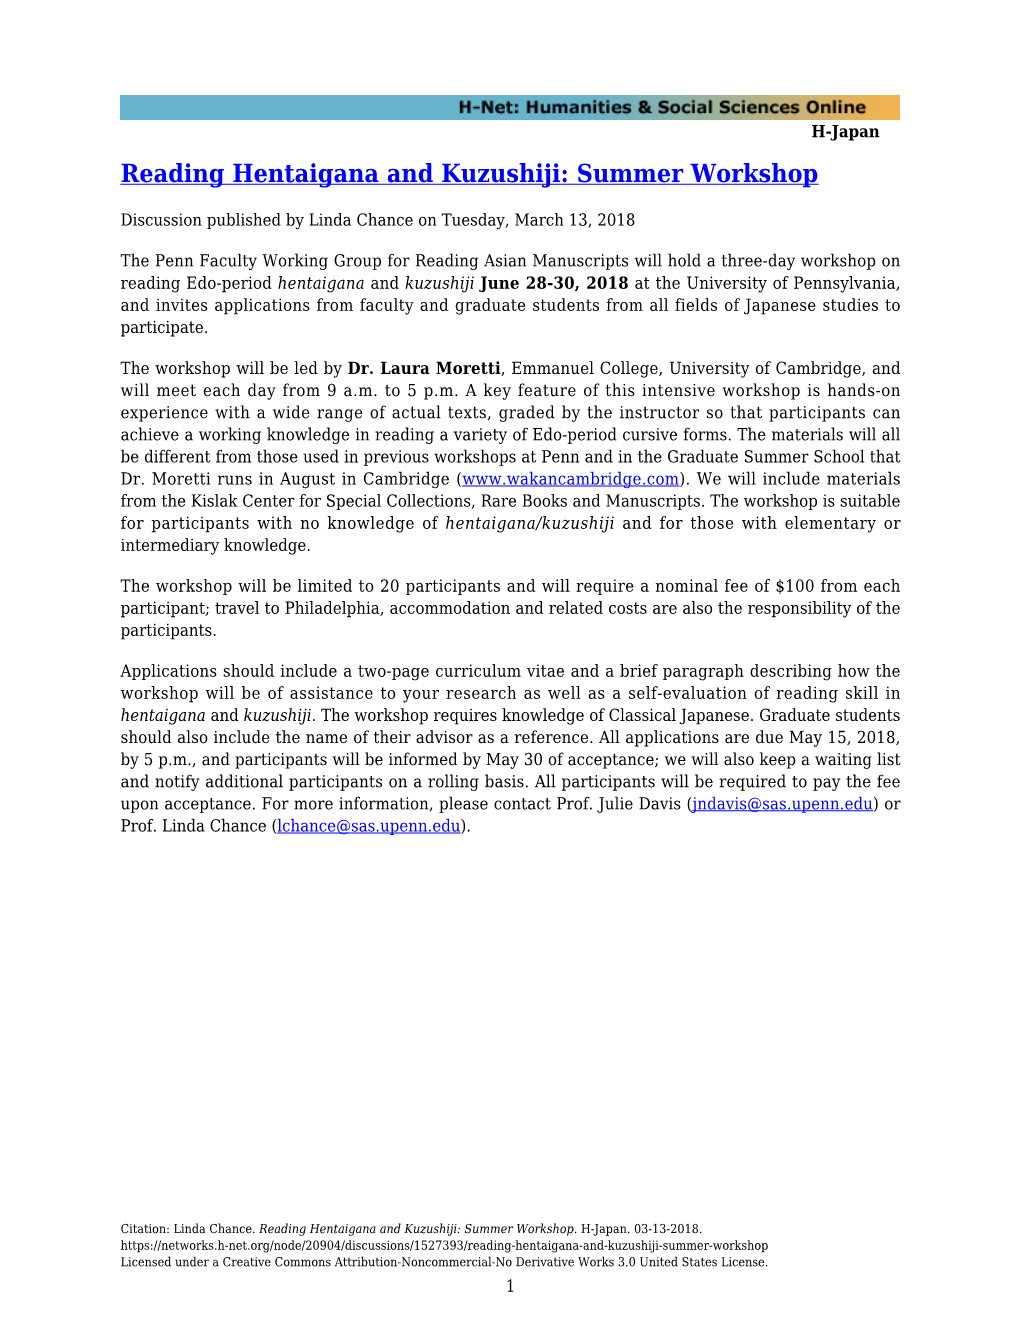 Reading Hentaigana and Kuzushiji: Summer Workshop